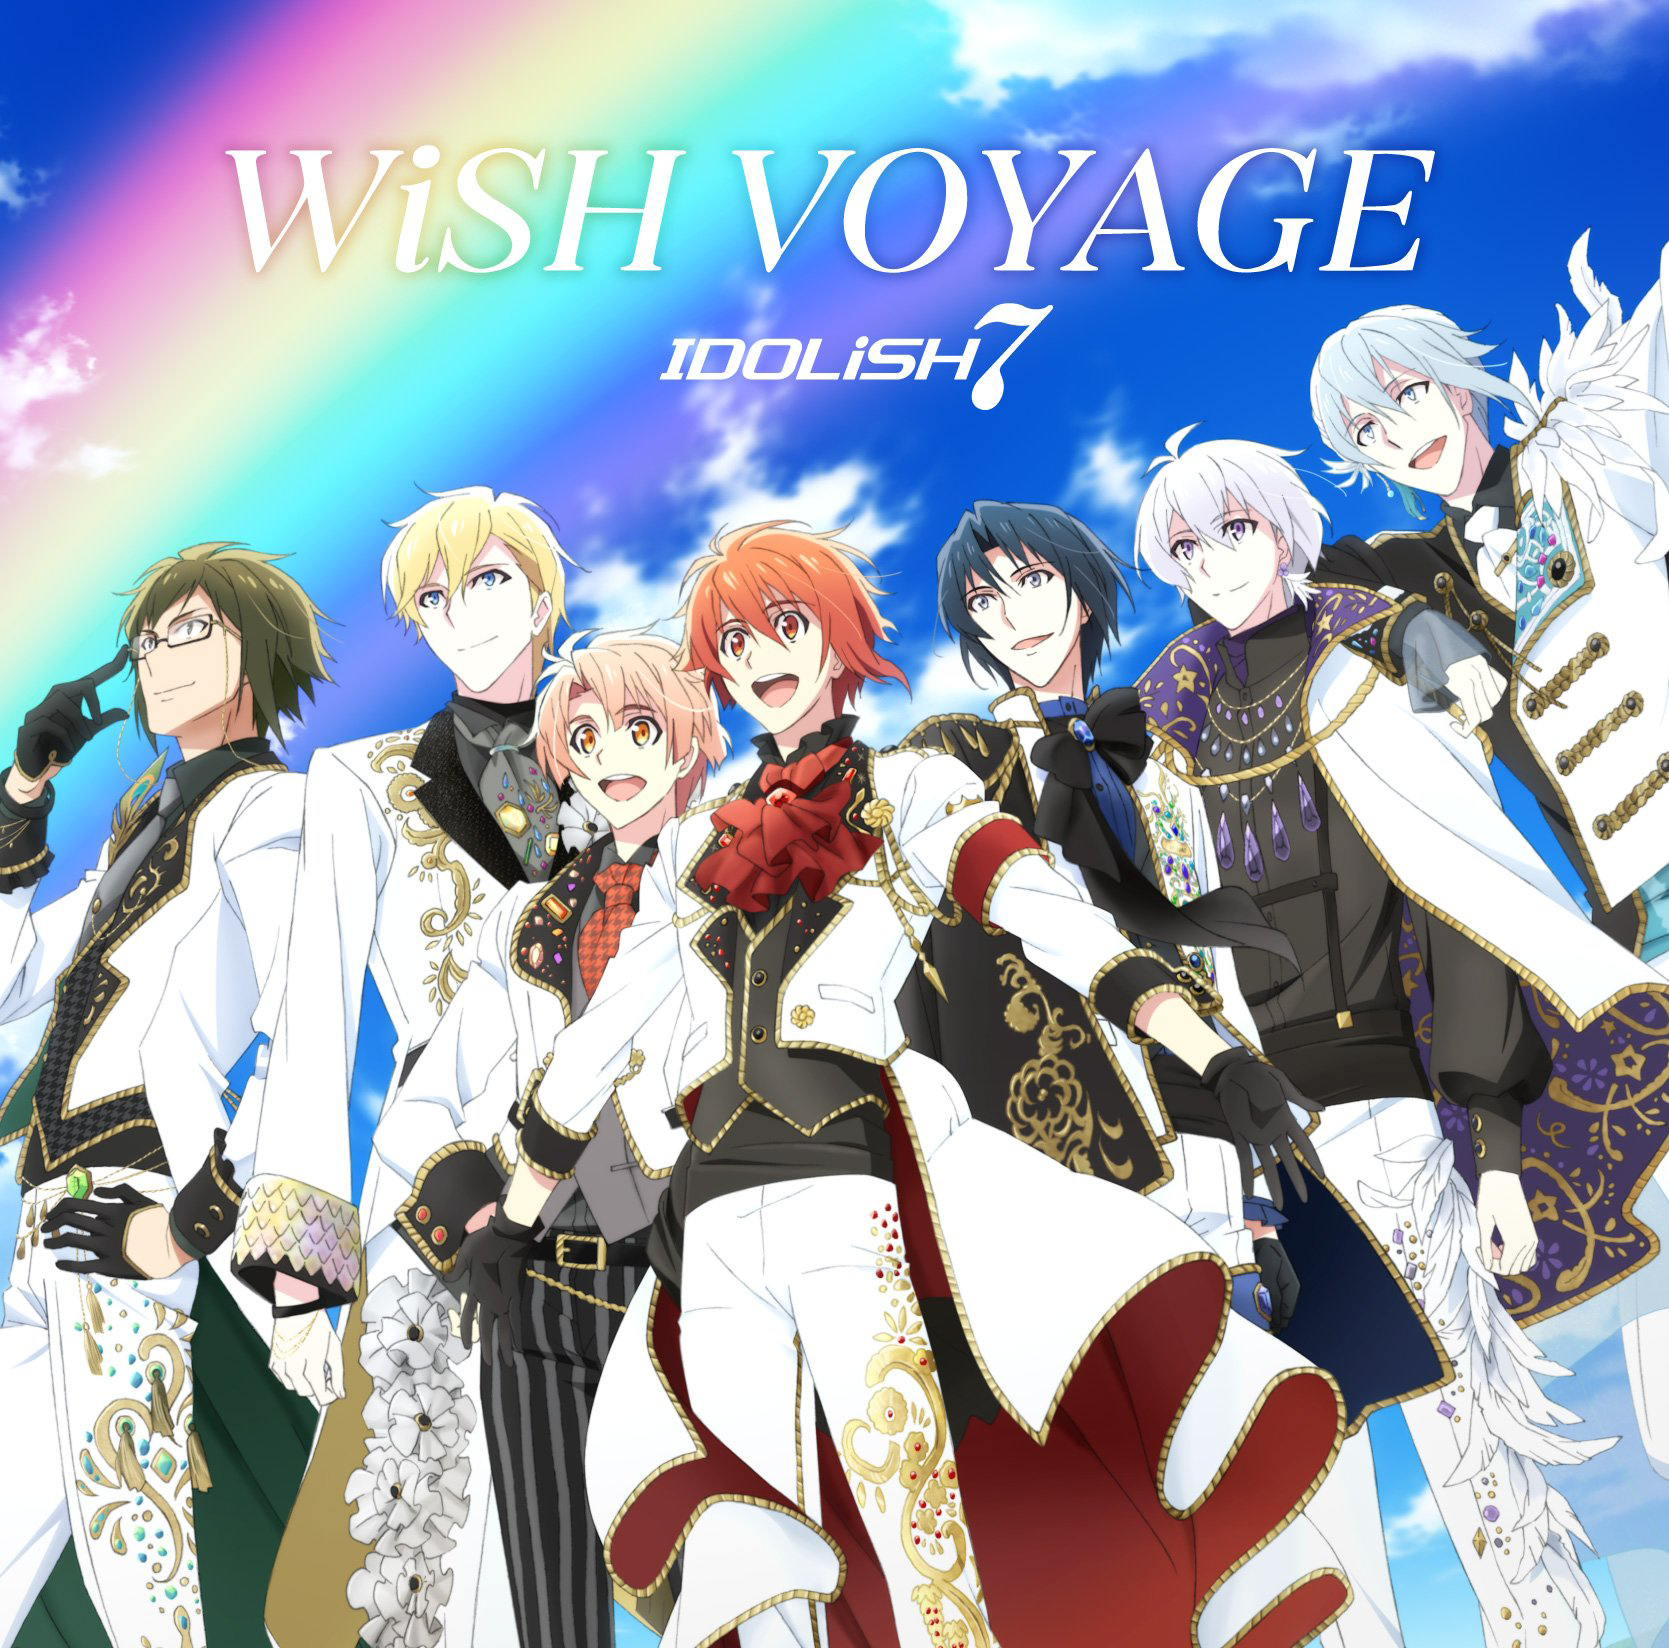 Wish Voyage The English Idolish7 Wiki Fandom